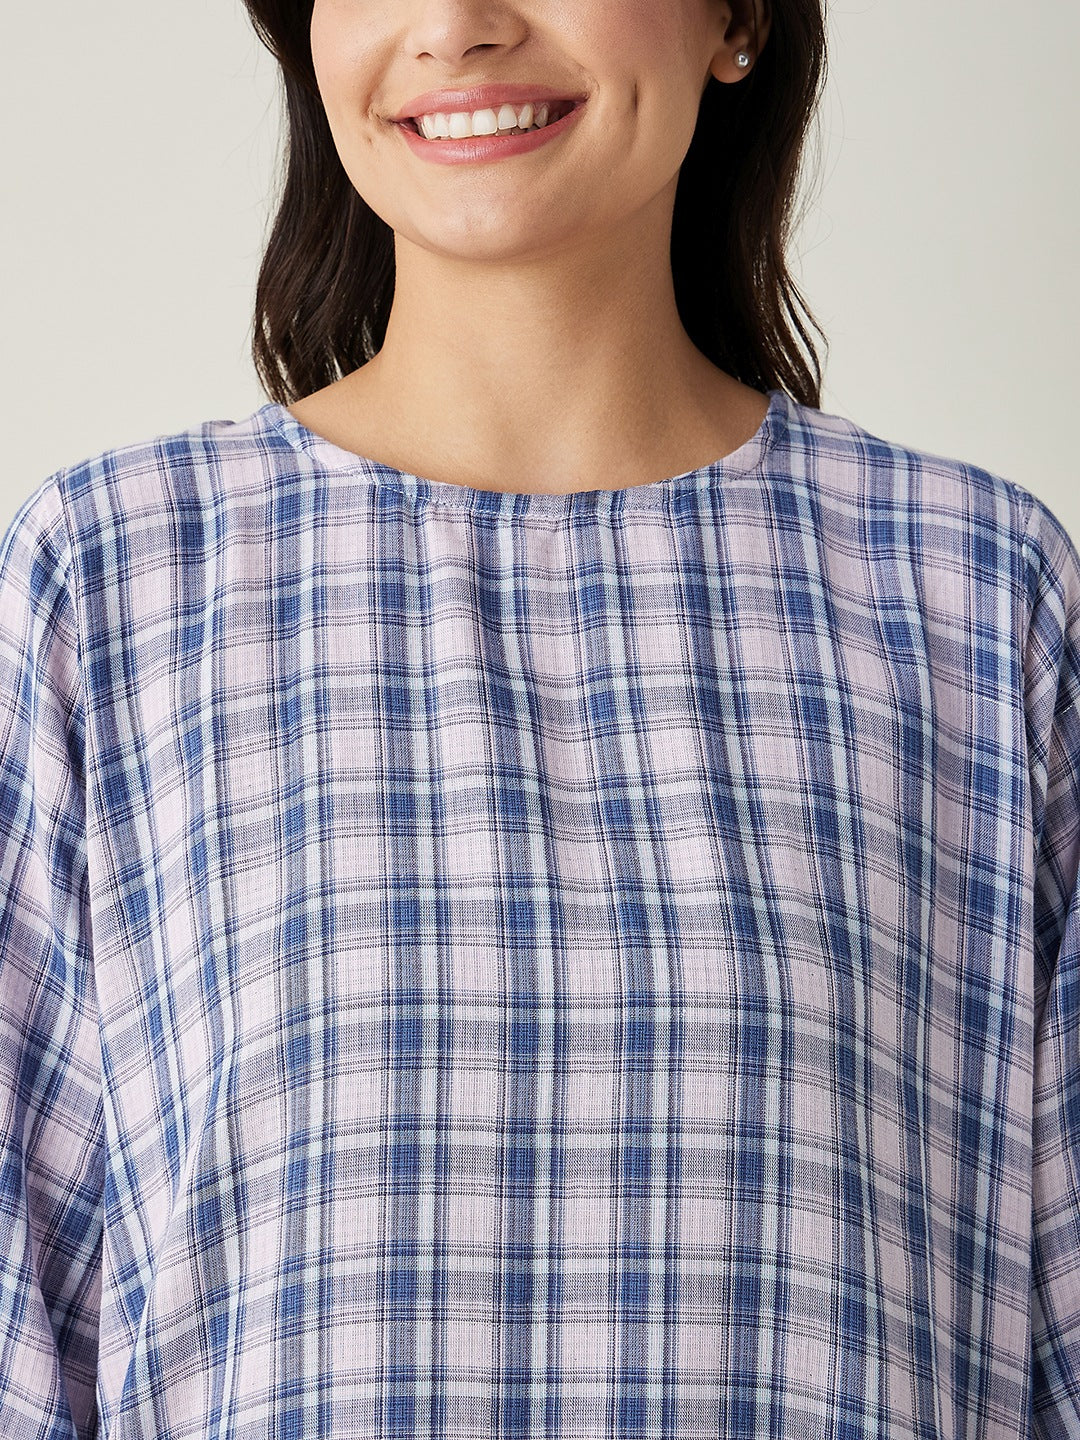 Women's Pink Checks Reversible Top Cotton Pyjama Set - The Kaftan Company